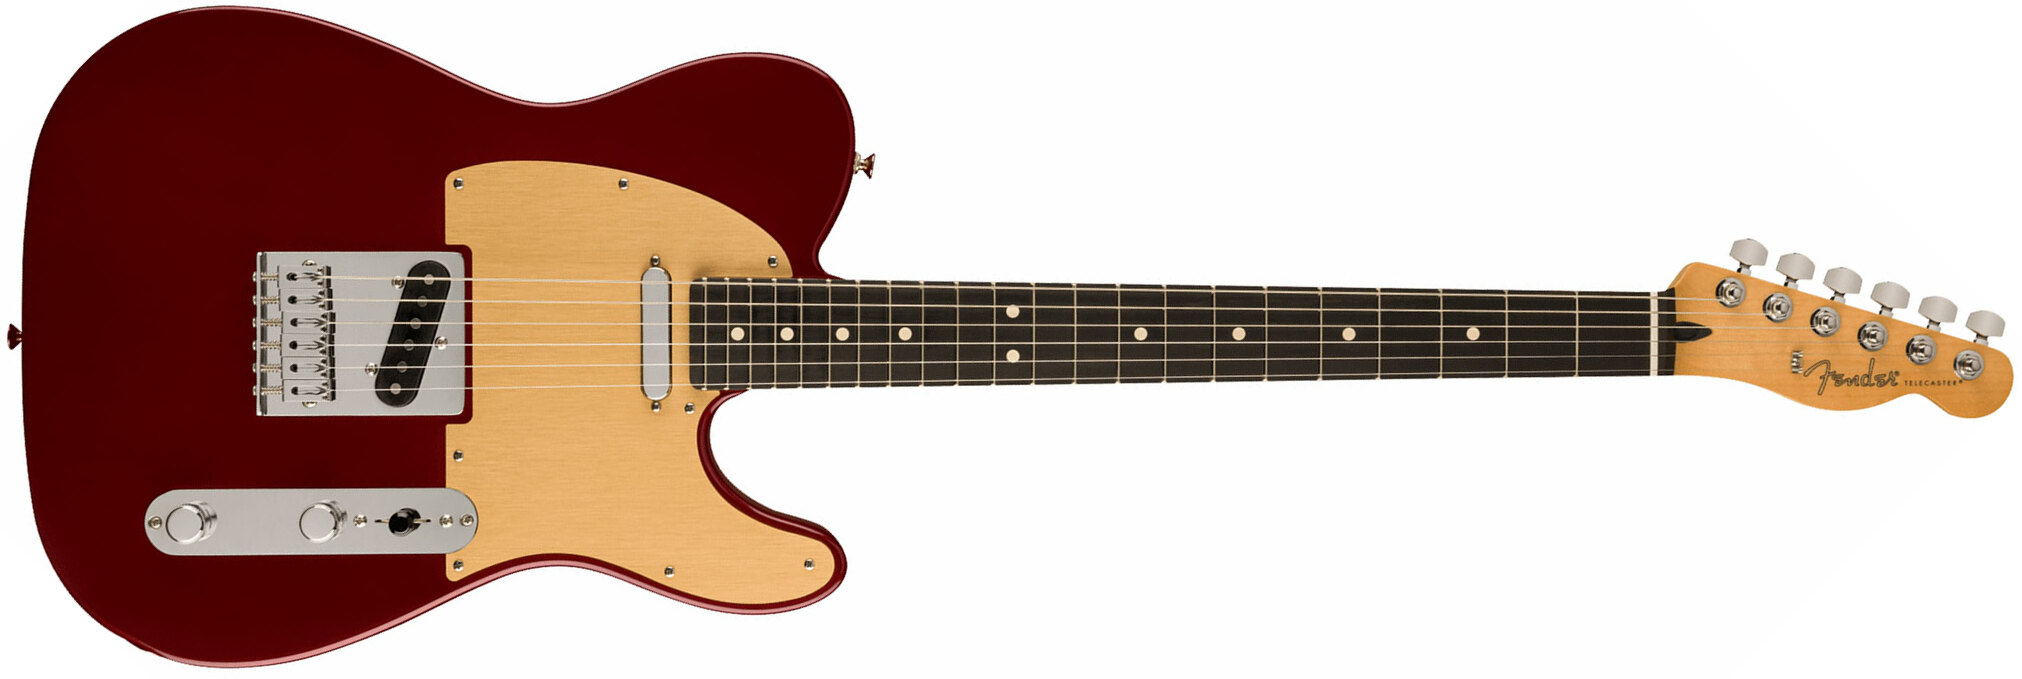 Fender Tele Player Ltd Mex 2s Pure Vintage Ht Eb - Oxblood - Tel shape electric guitar - Main picture